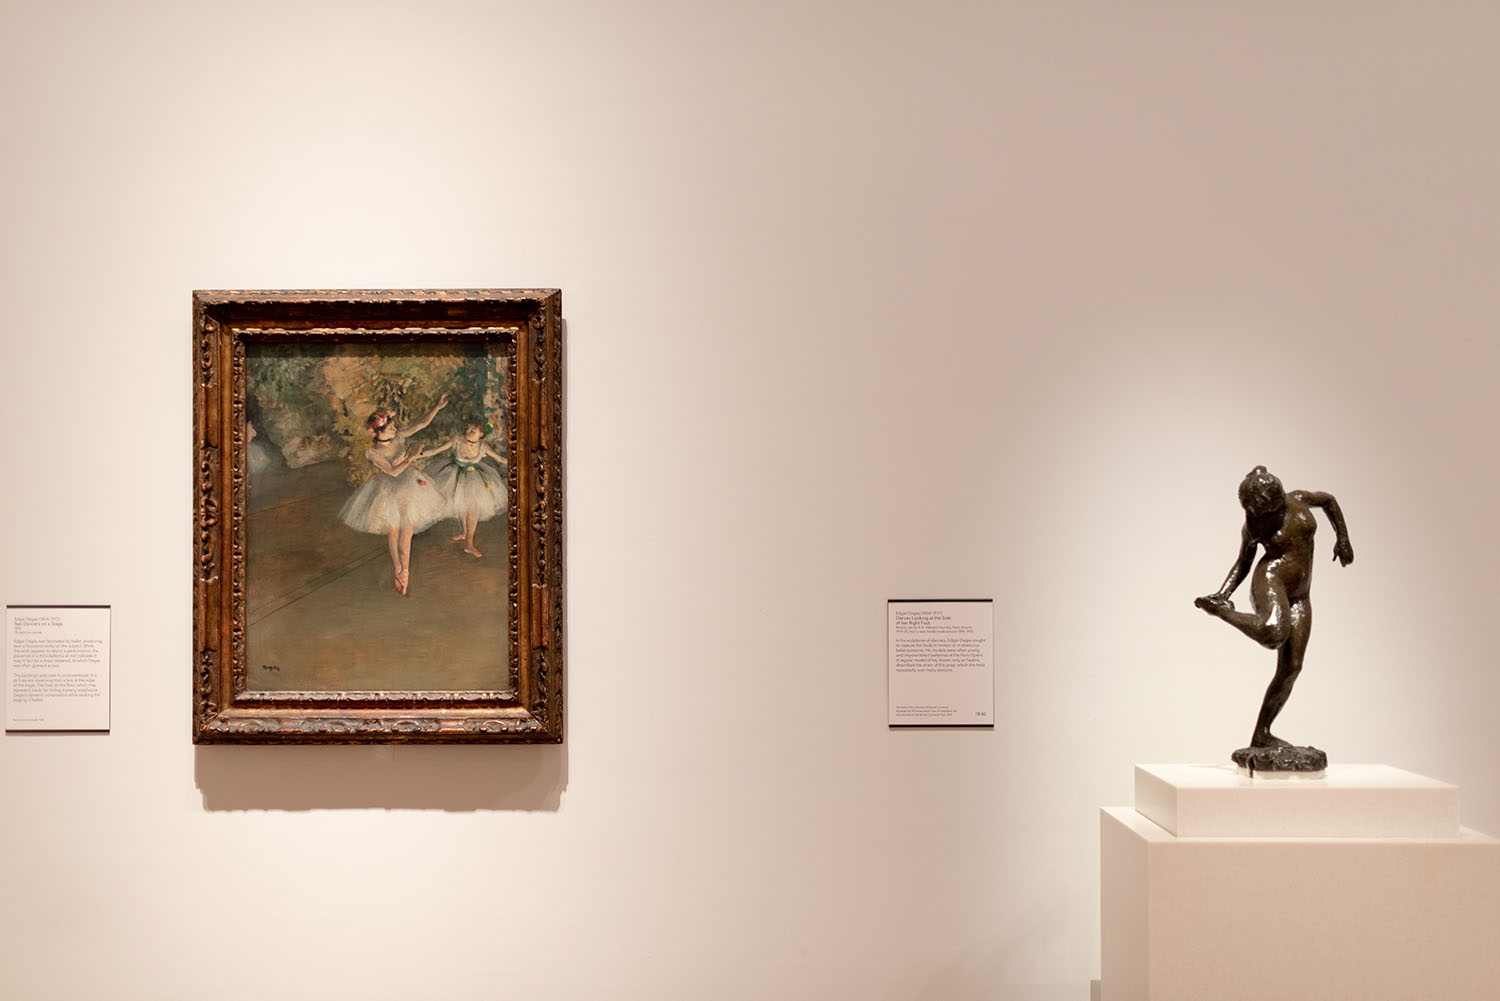 Coco & Vera - Degas ballerina painting and Degas ballerina statue at Cortauld Gallery, London